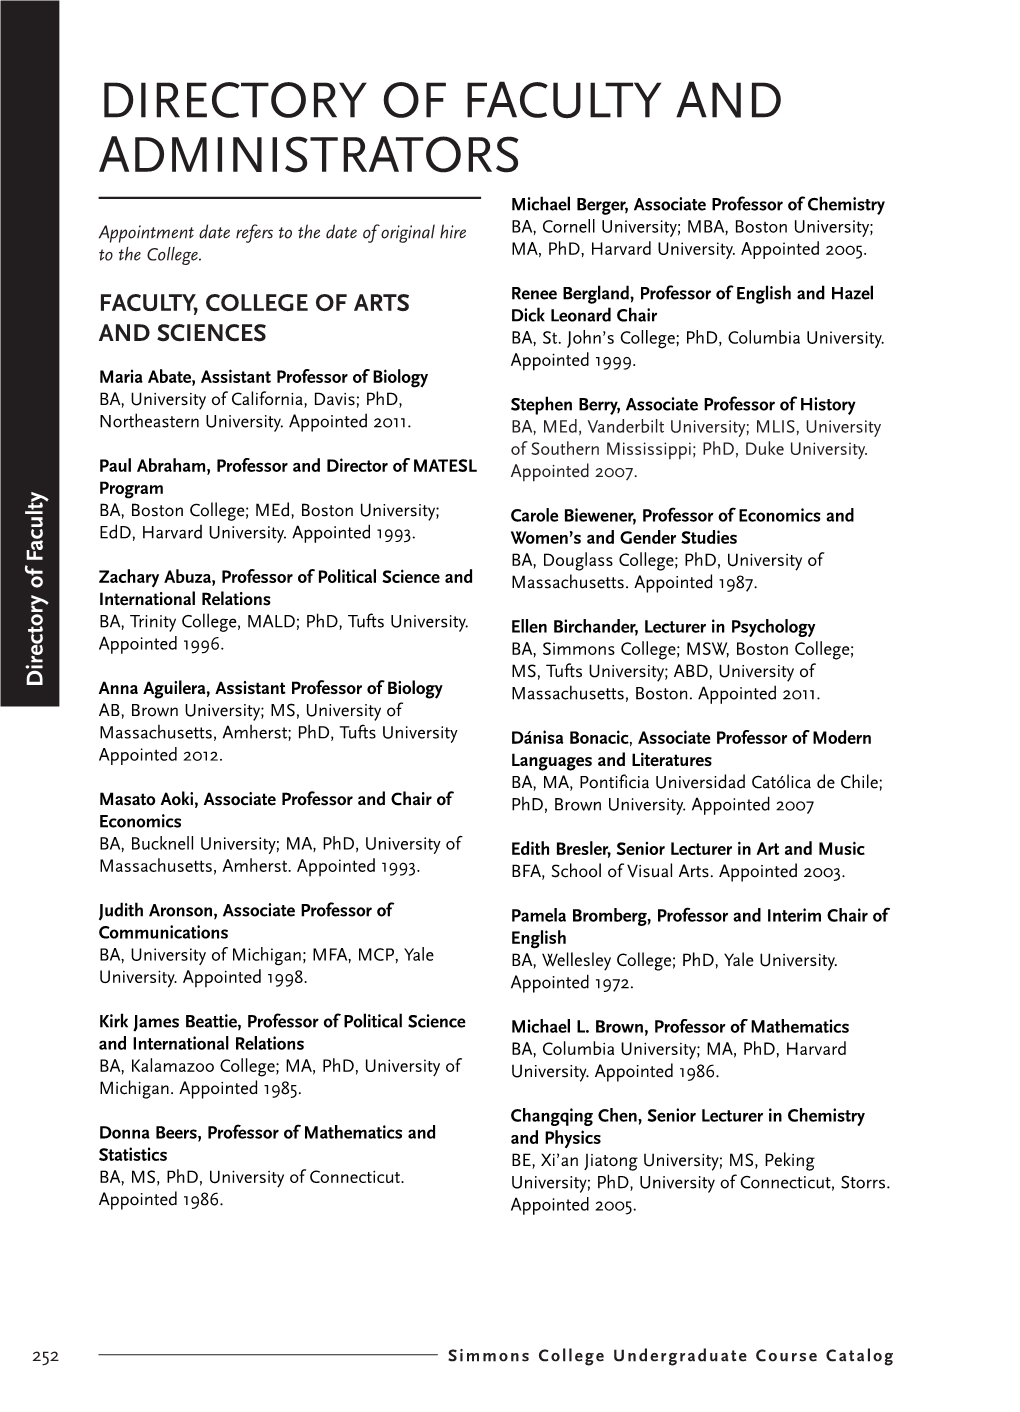 Simmons College Undergraduate Course Catalog 2014-2015